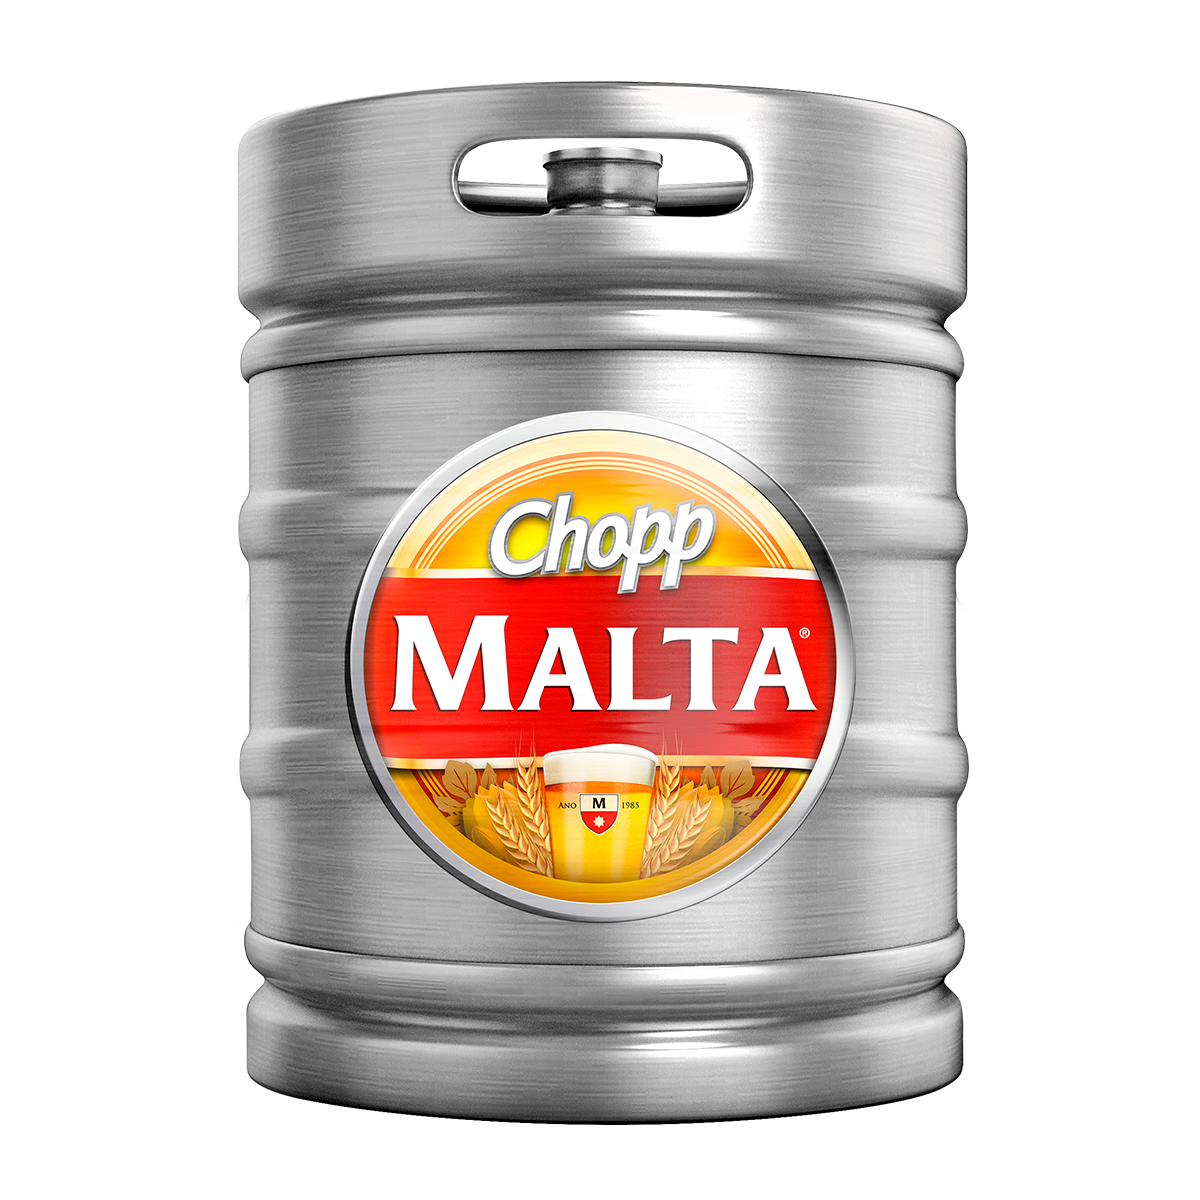 Chopp Malta